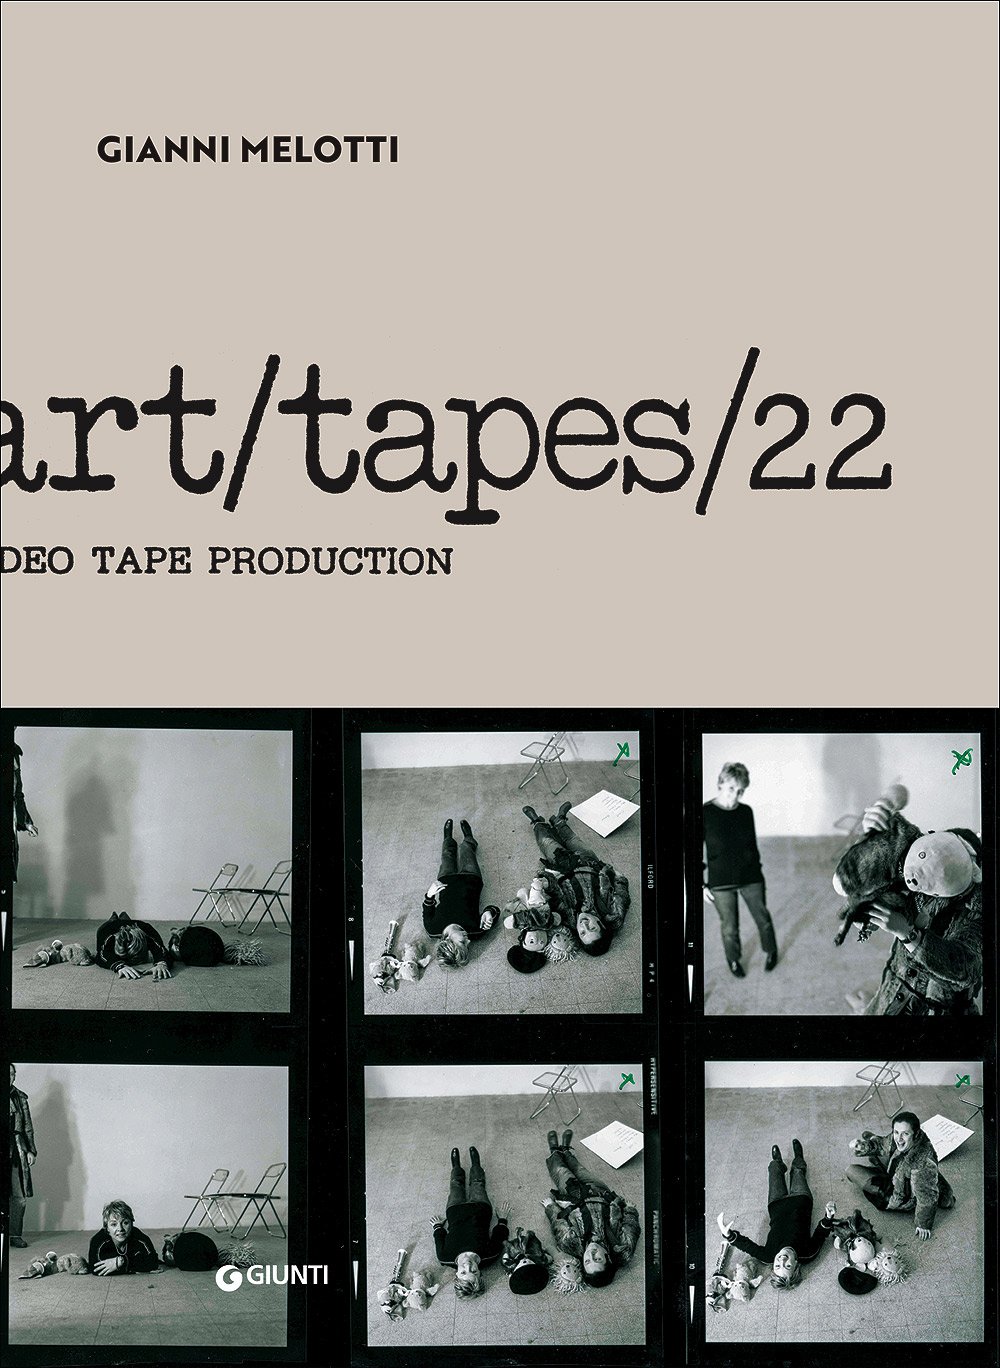 Gianni Melotti, art/tapes/22 (Giunti)